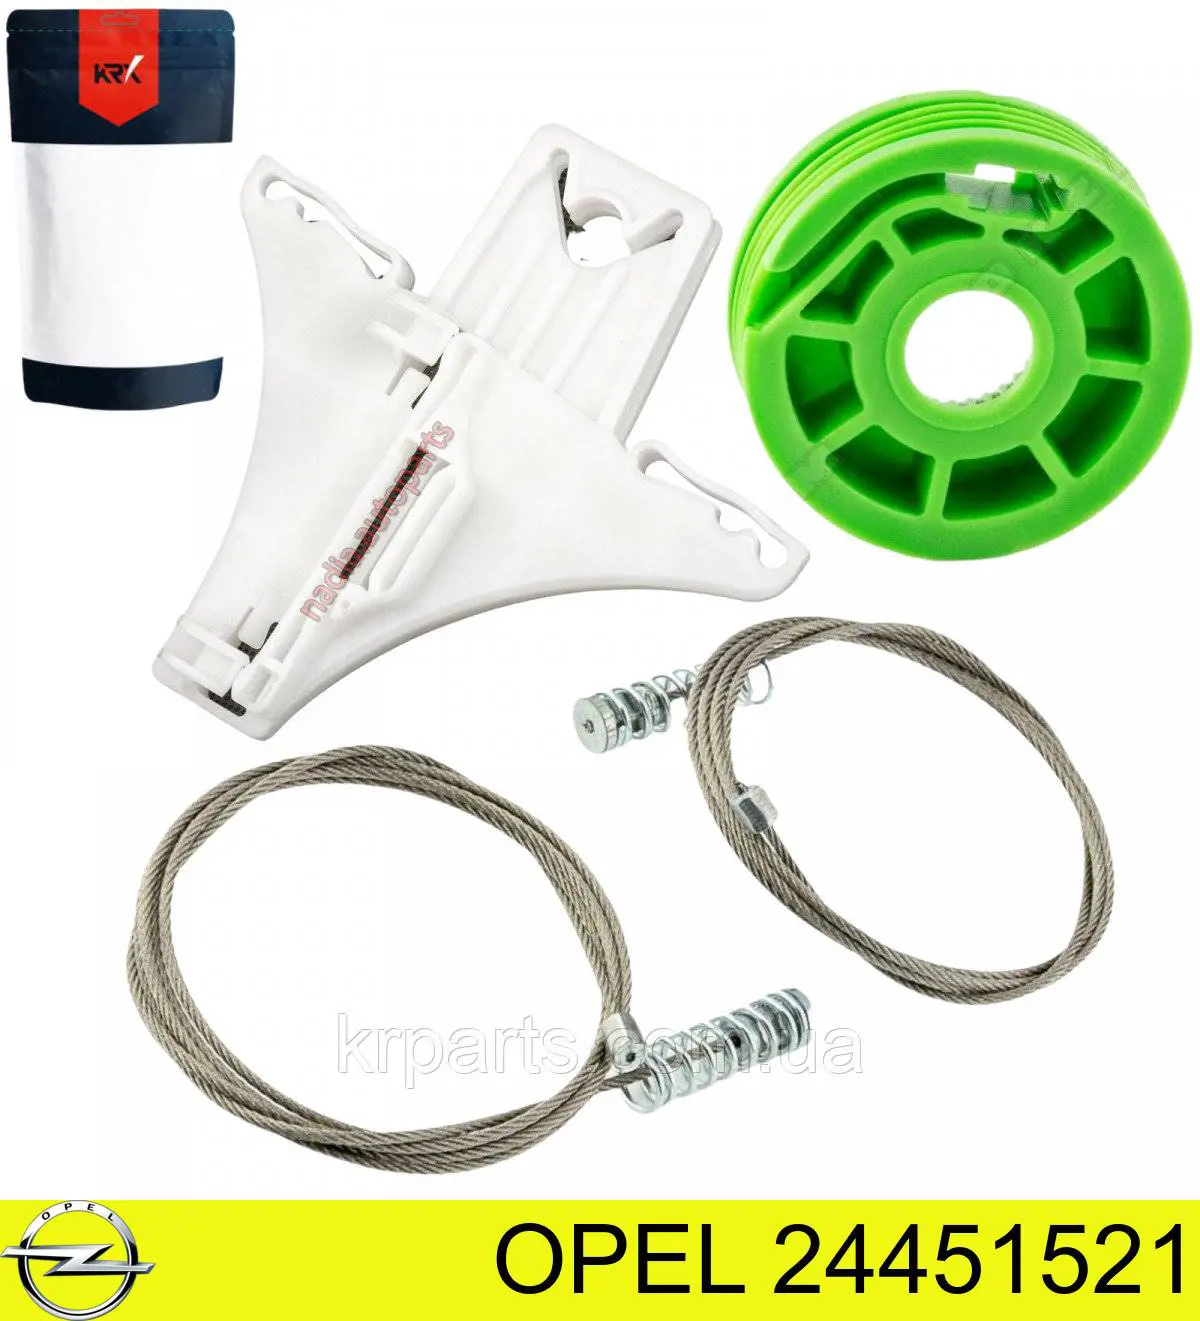 24451521 Opel mecanismo de acionamento de vidro da porta traseira esquerda